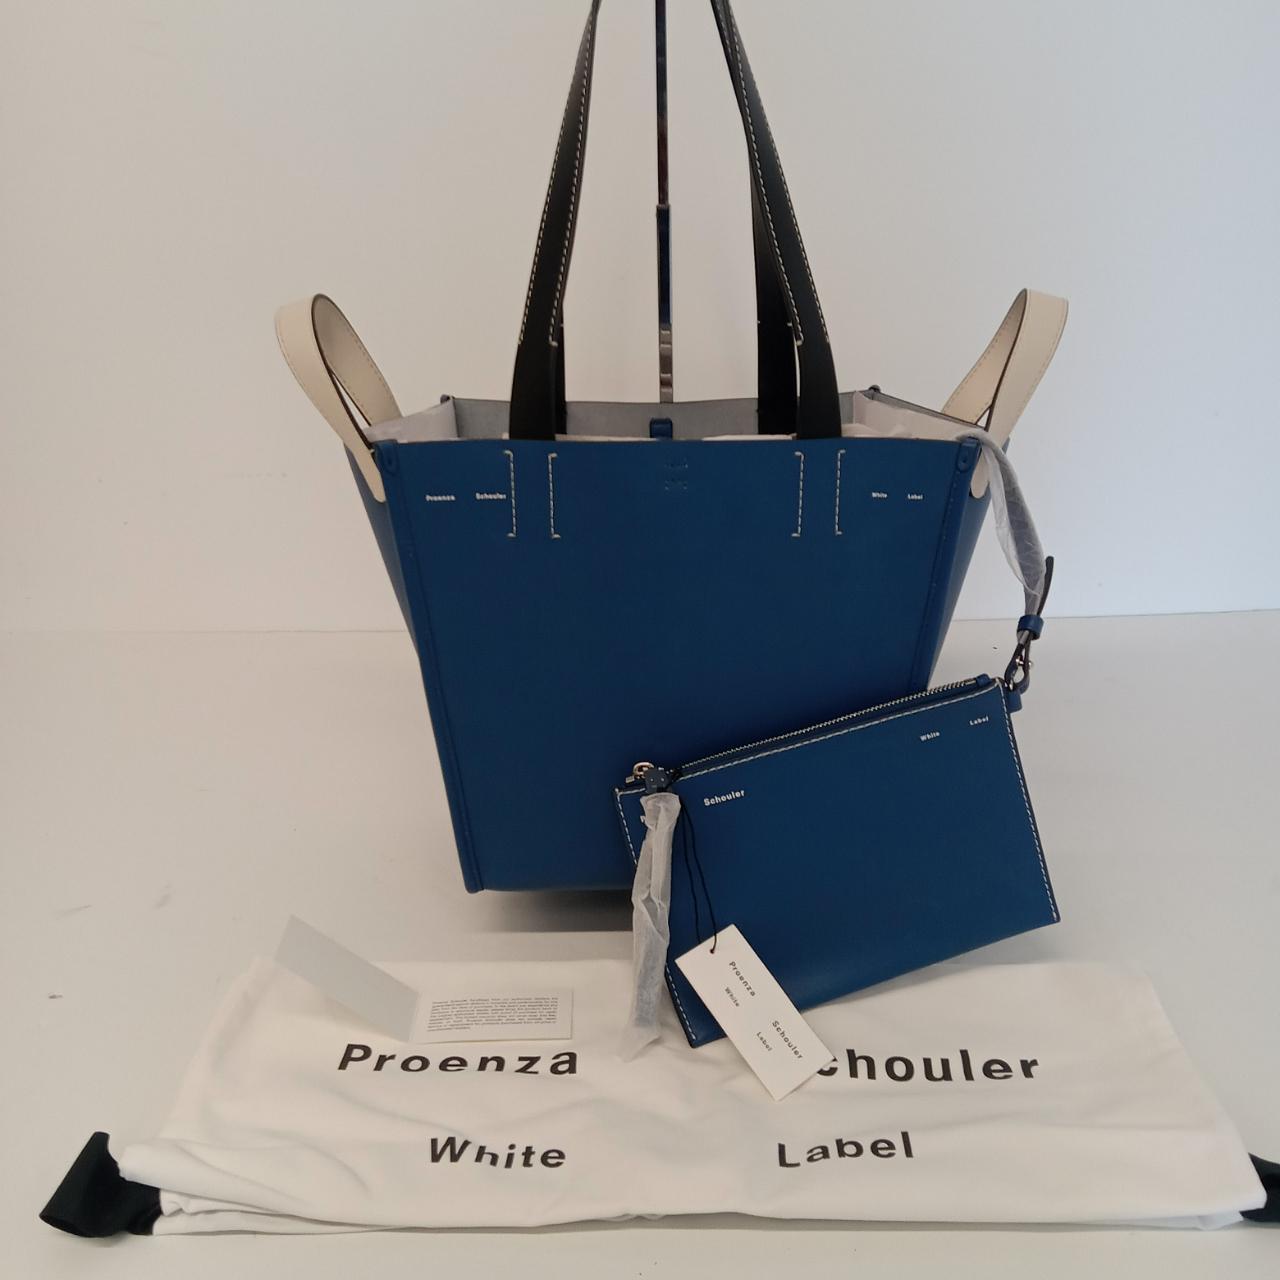 Proenza Schouler White Label large tote bag